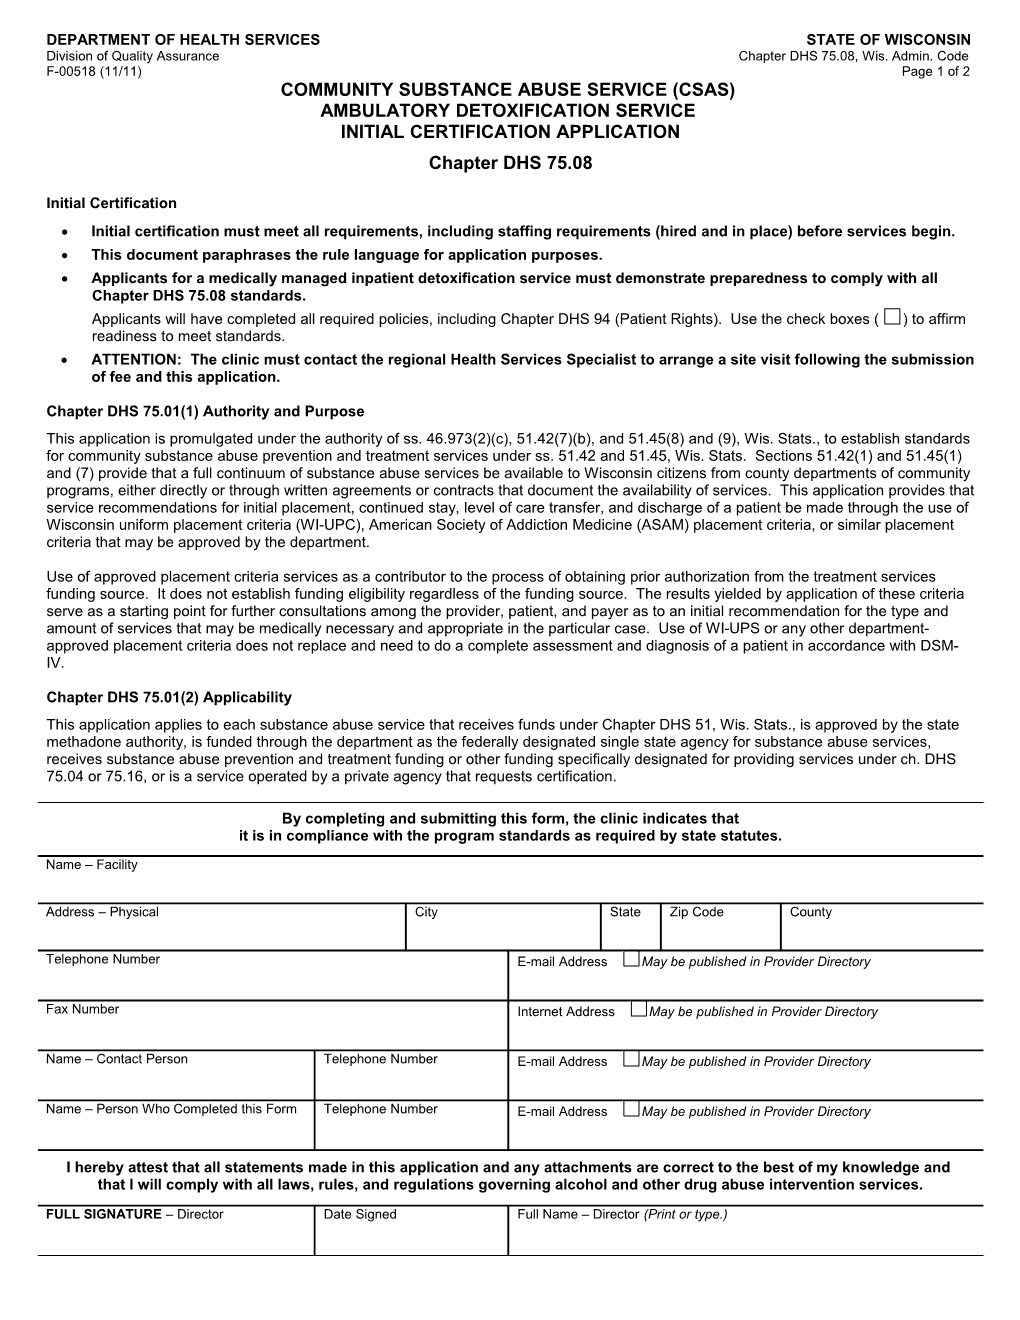 CSAS Ambulatory Detoxification Service Initial Certification Application-DHS 75.08, F-00518